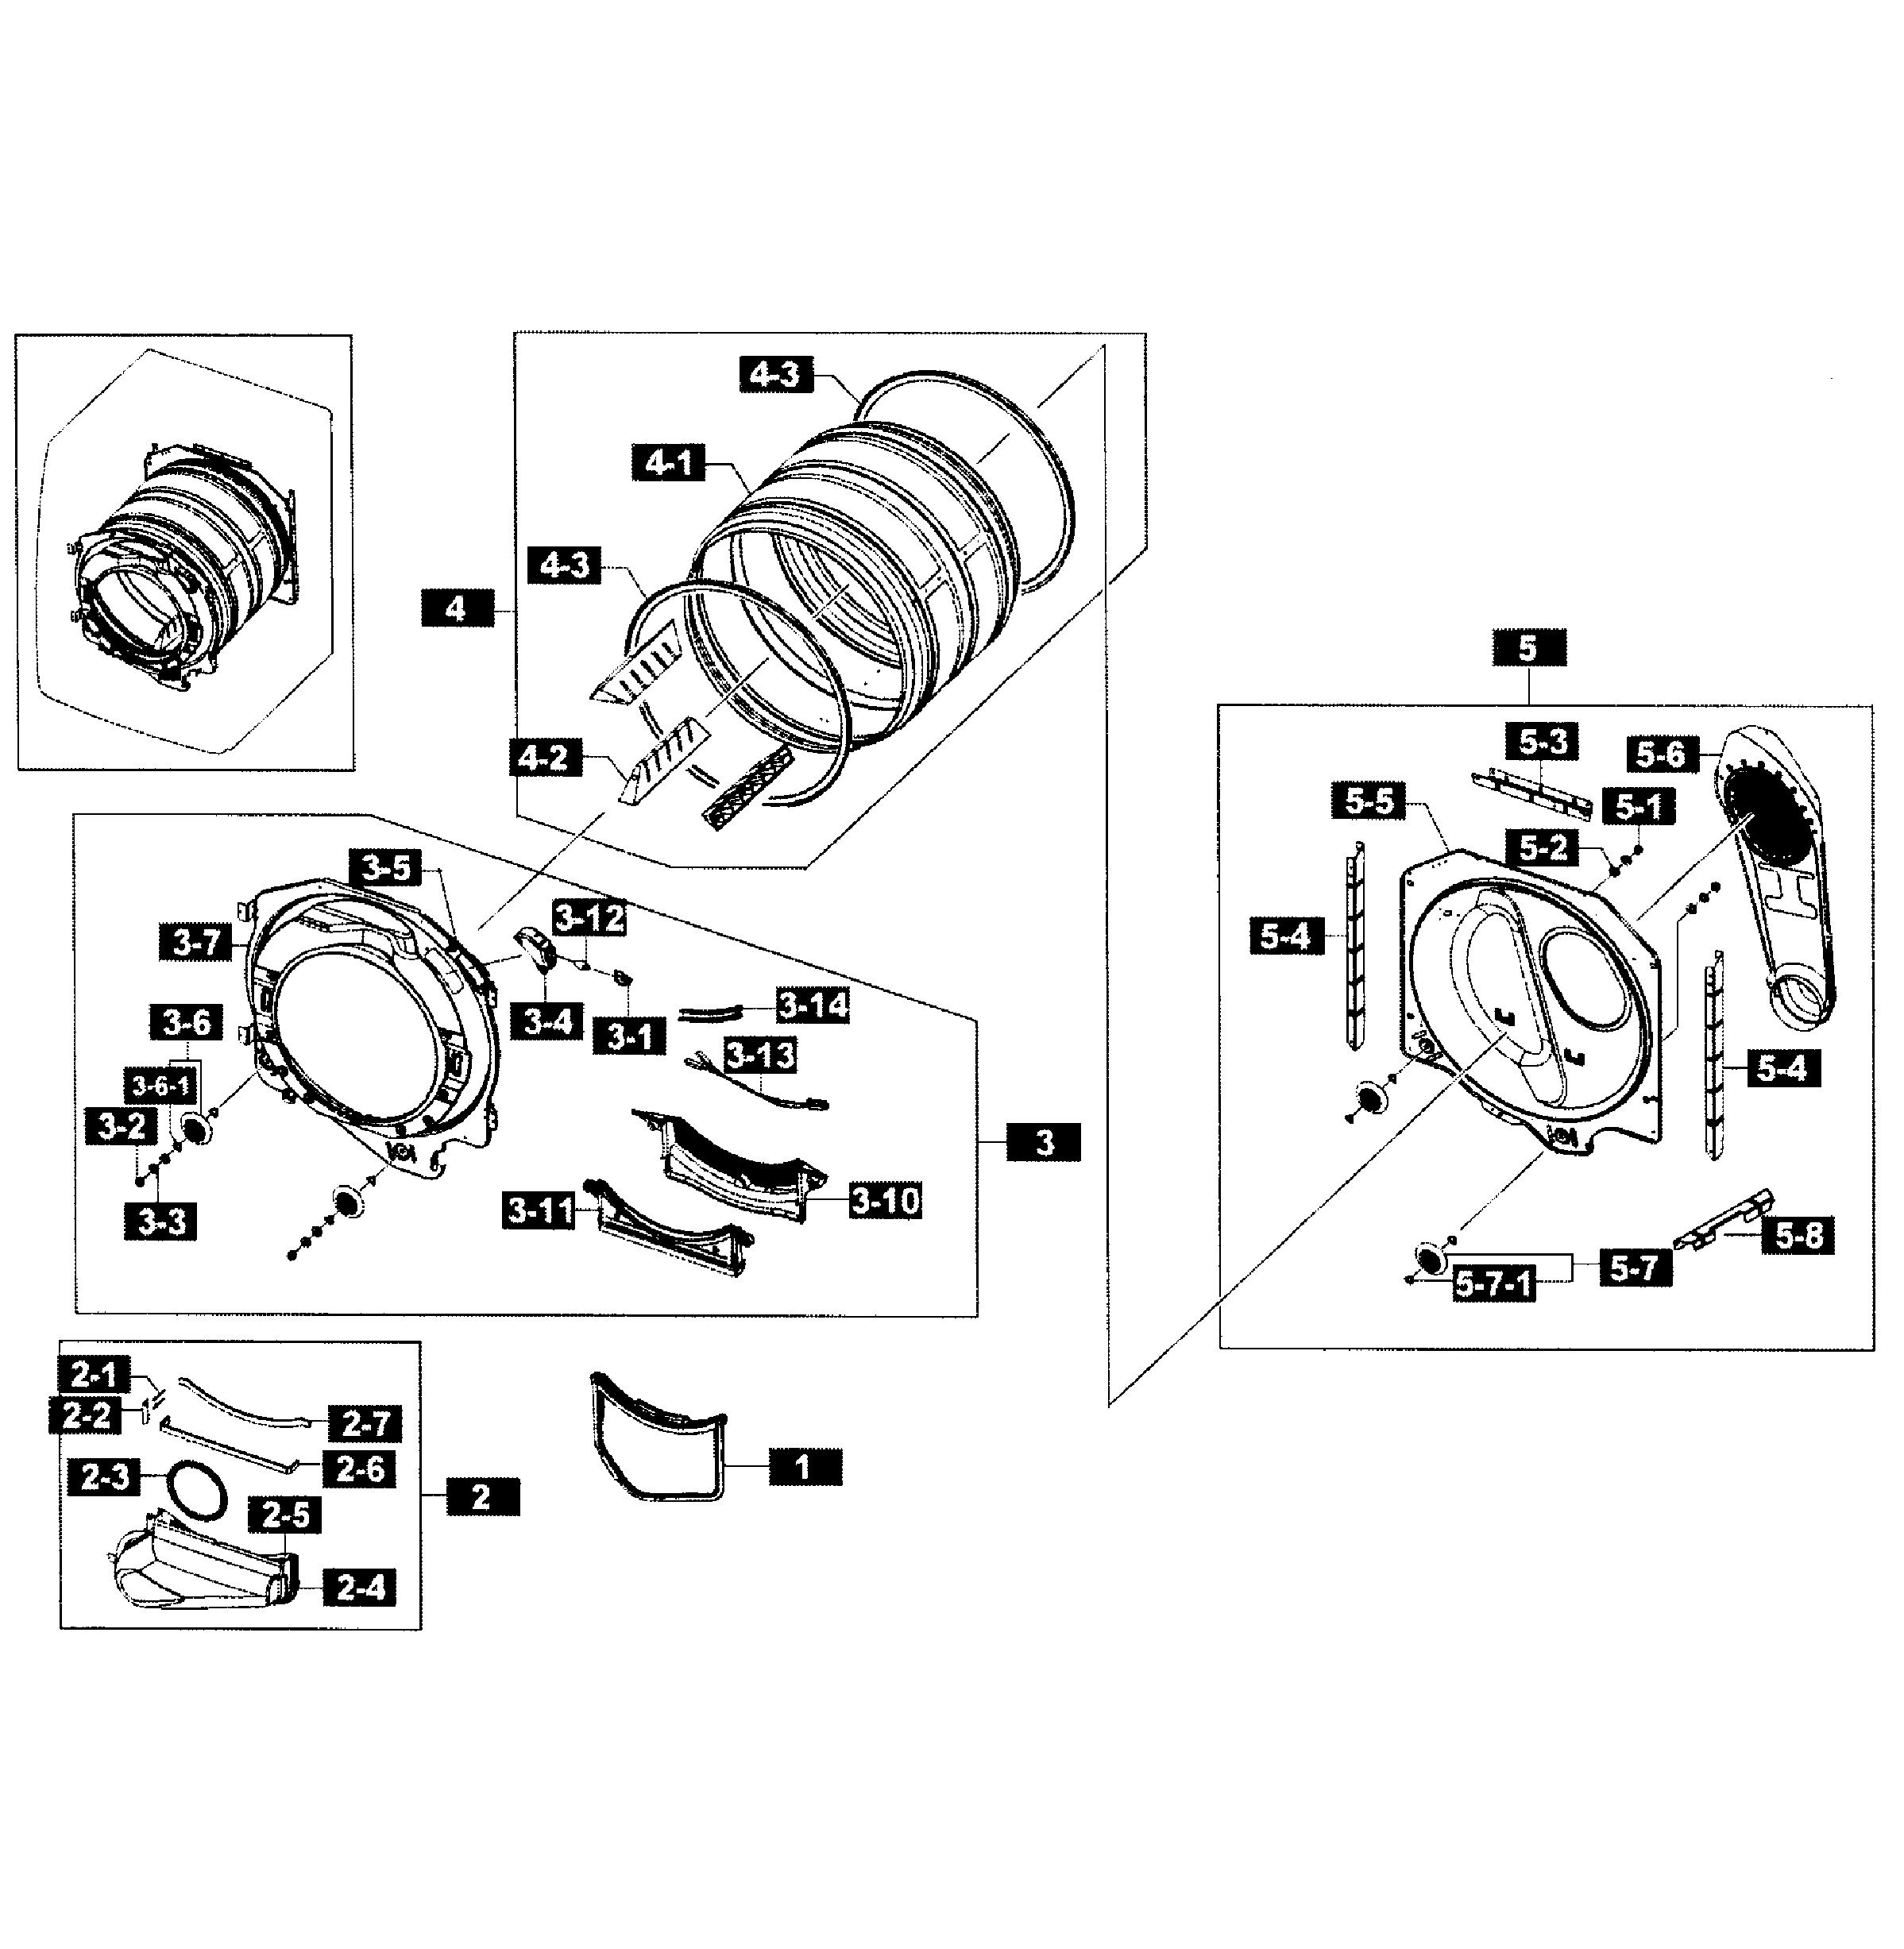 Drum Brake Parts Diagram Samsung Model Dv365gtbgwr A3 0001 Residential Dryer Genuine Parts Of Drum Brake Parts Diagram